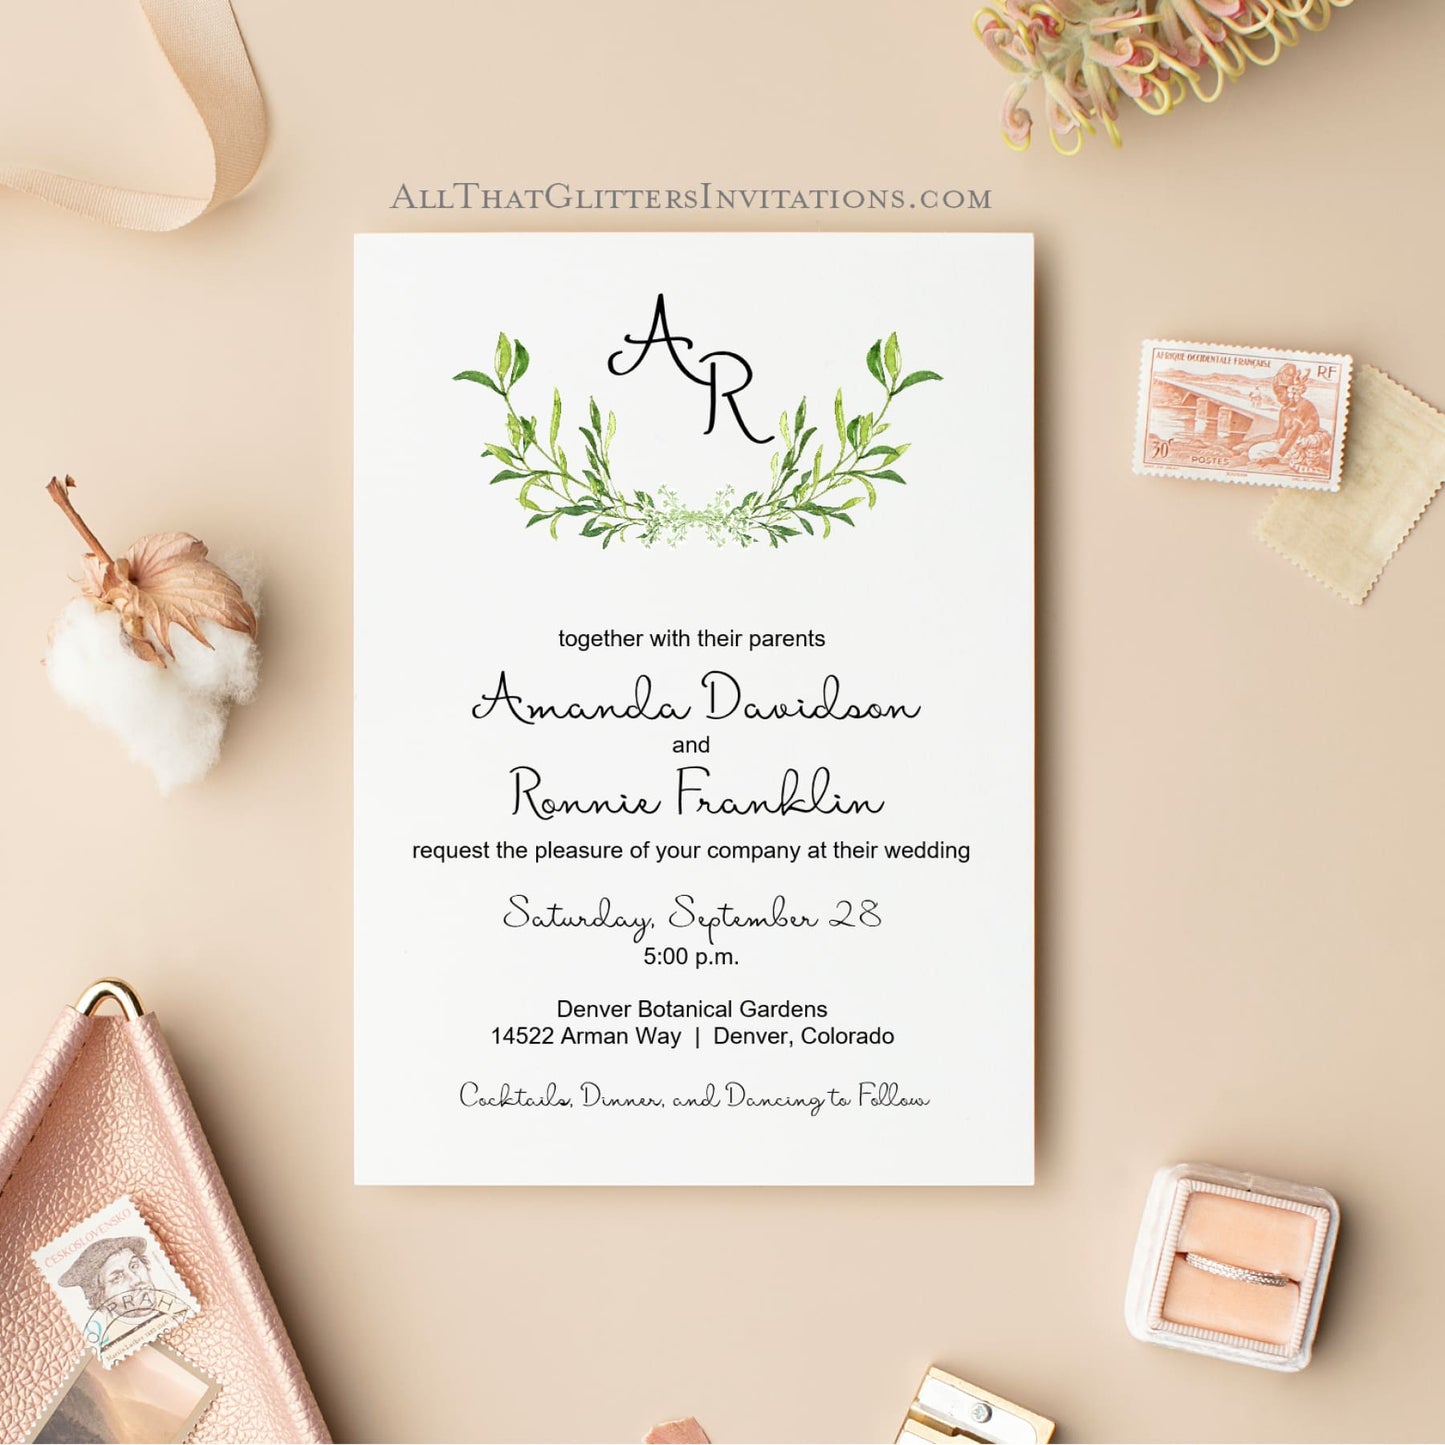 Rustic Wreath Wedding Invitation - All That Glitters Invitations